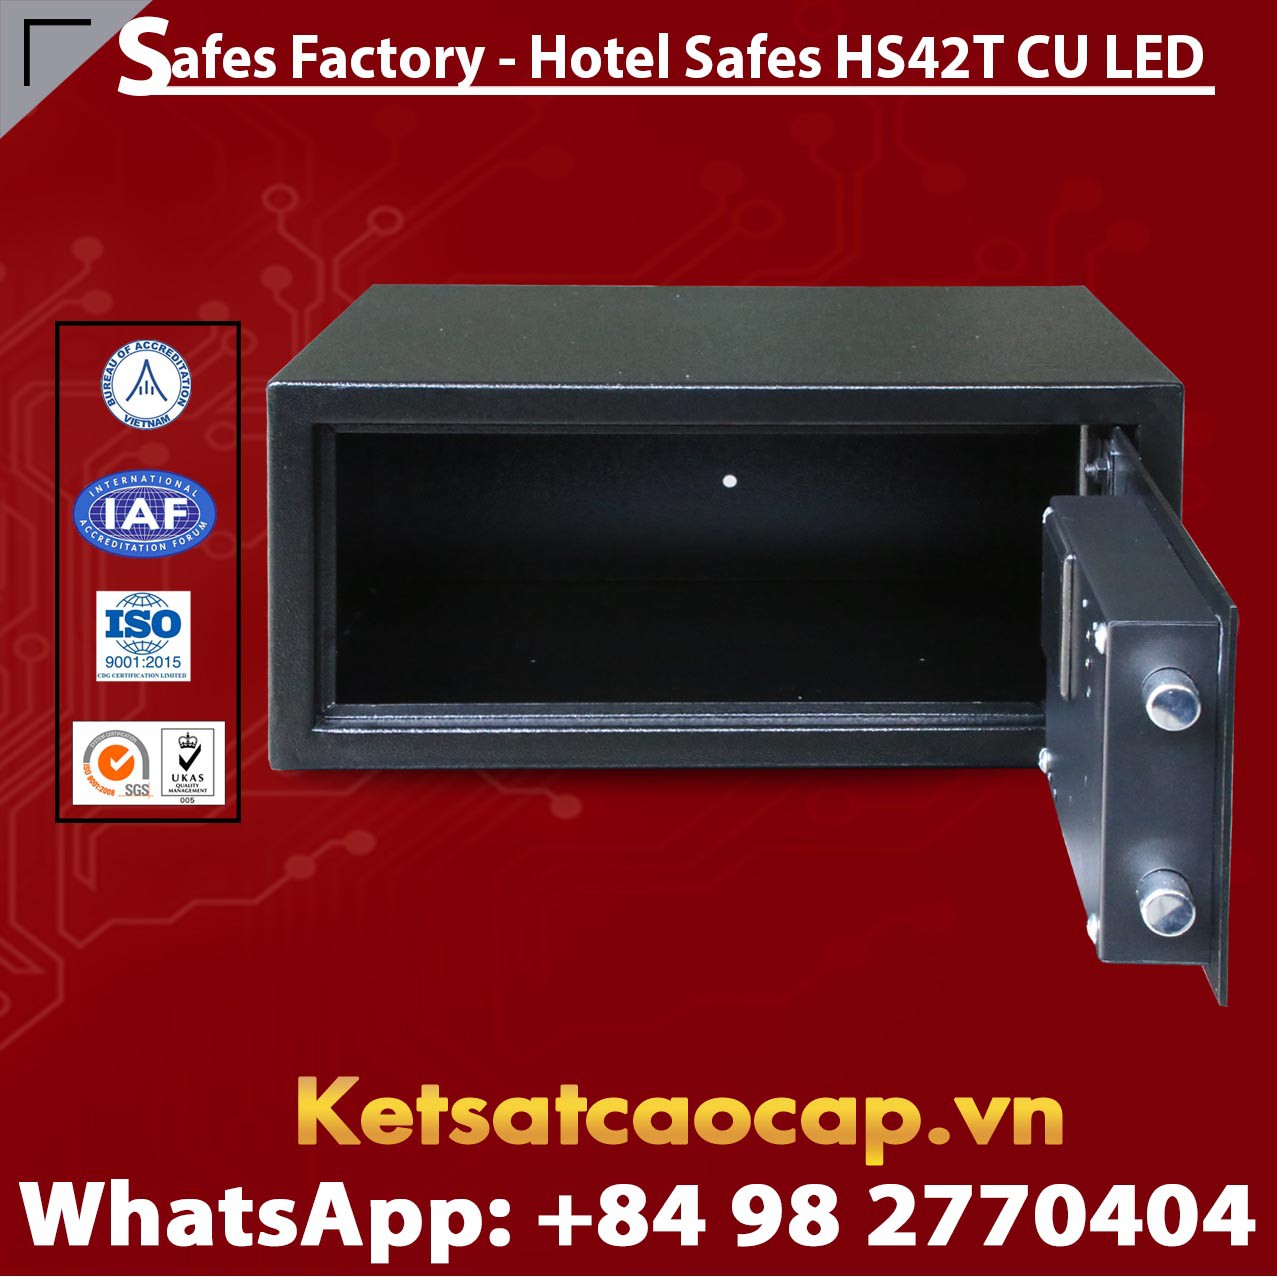 Hotel Safety Deposit Box HOMESUN HS42T CU LED